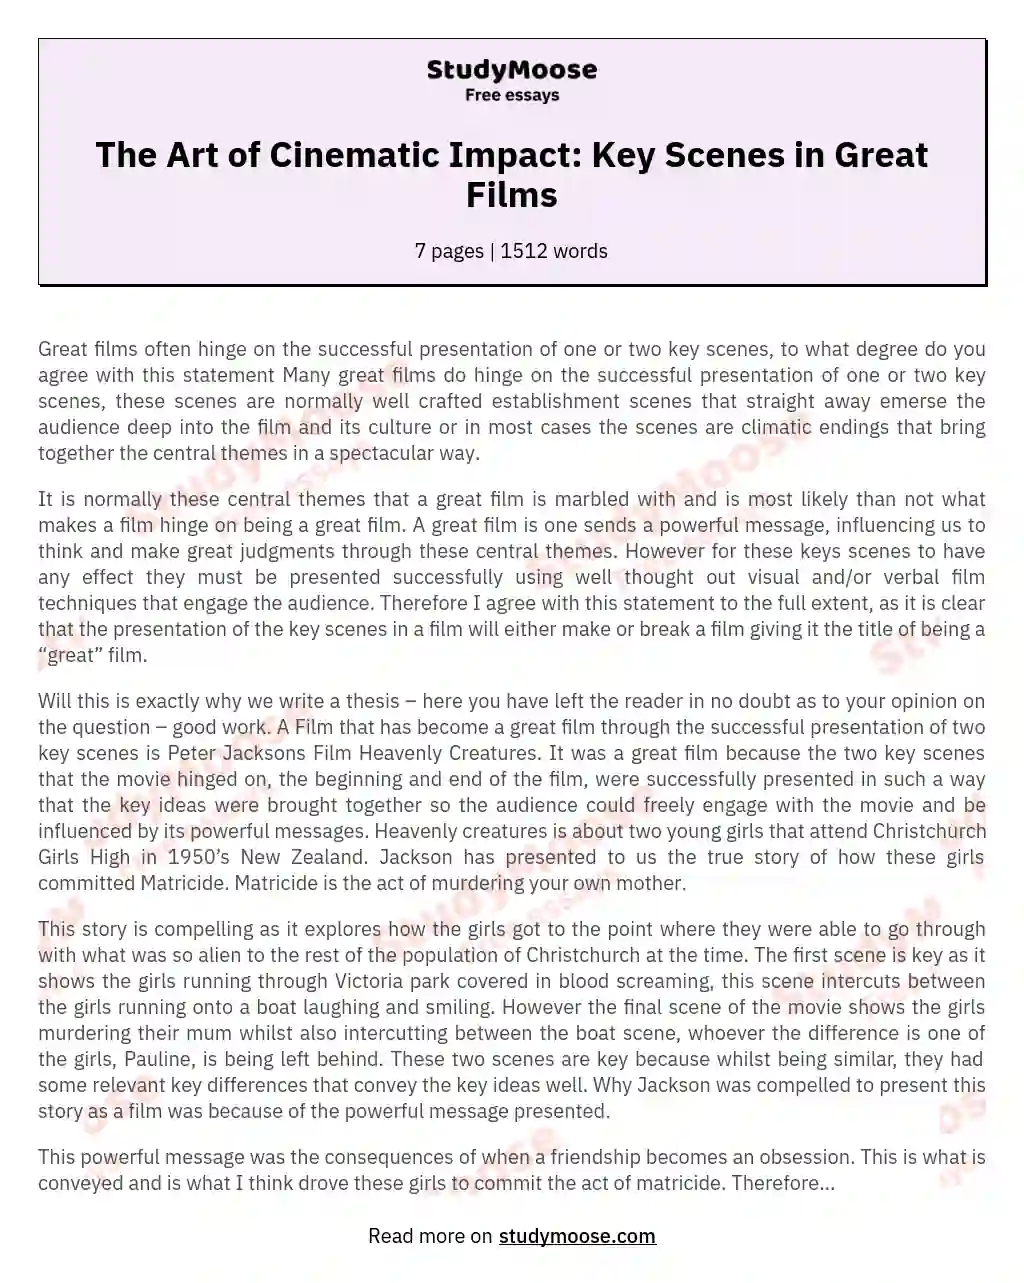 The Art of Cinematic Impact: Key Scenes in Great Films essay